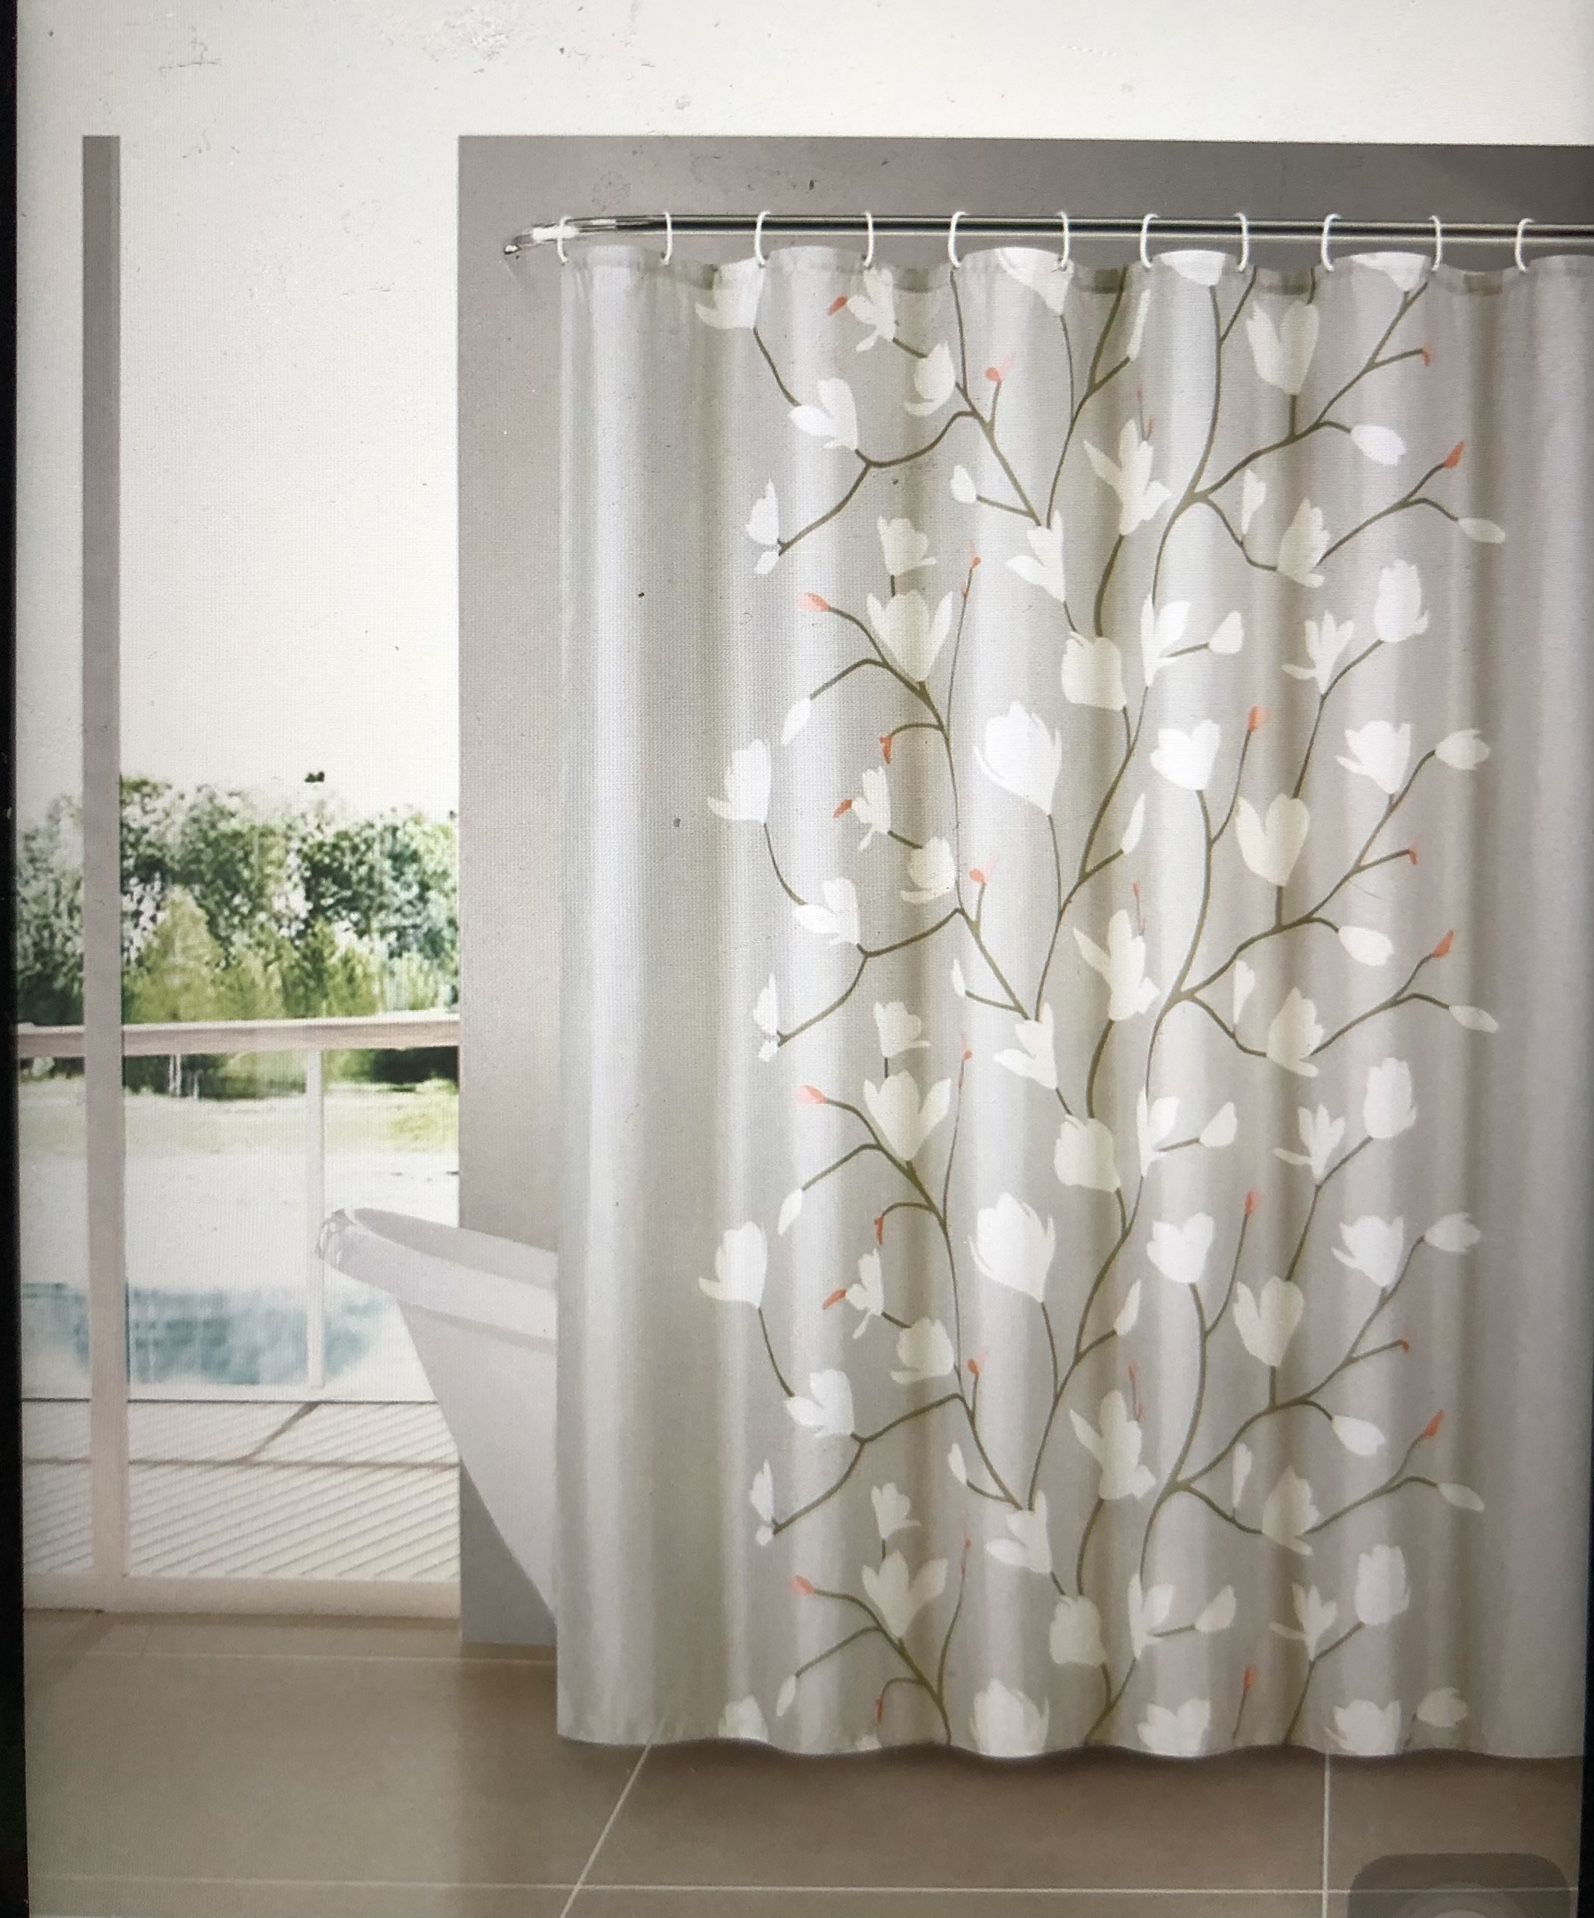 #8-1)Shower Curtain 